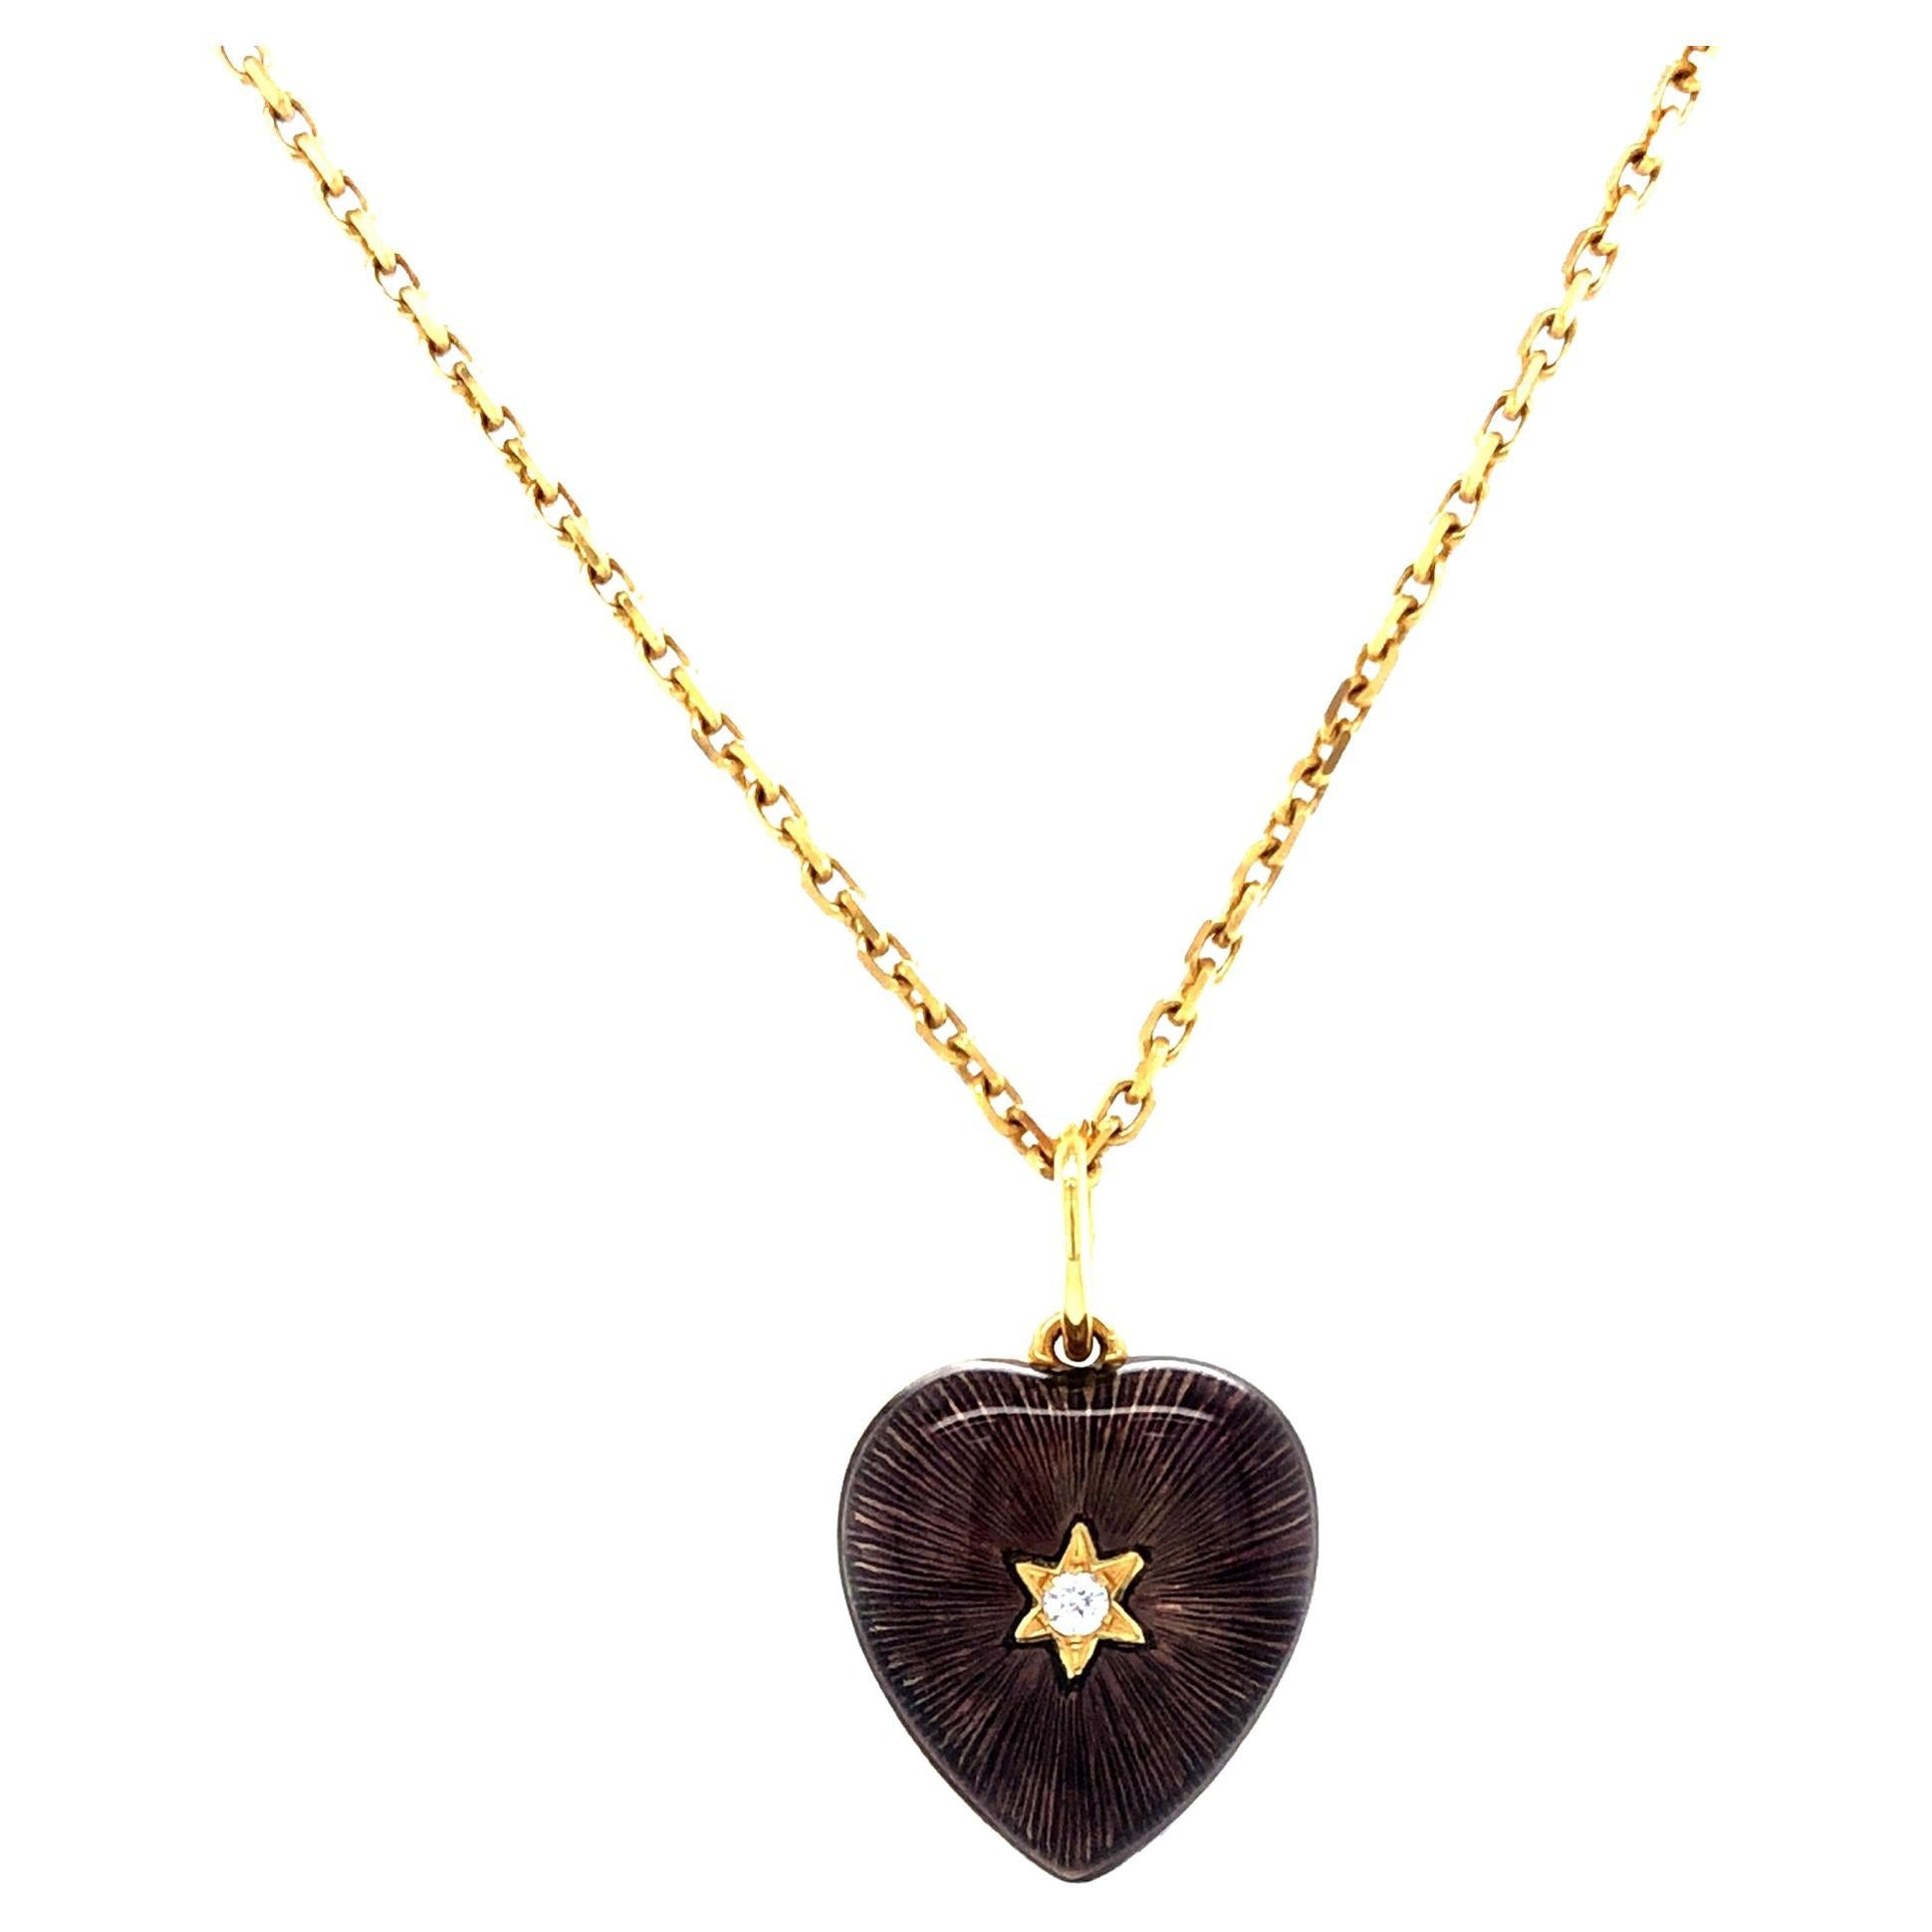  Heart Pendant with Star 18k Yellow Gold Purple Enamel 2 Diamonds 0.03 ct G VS